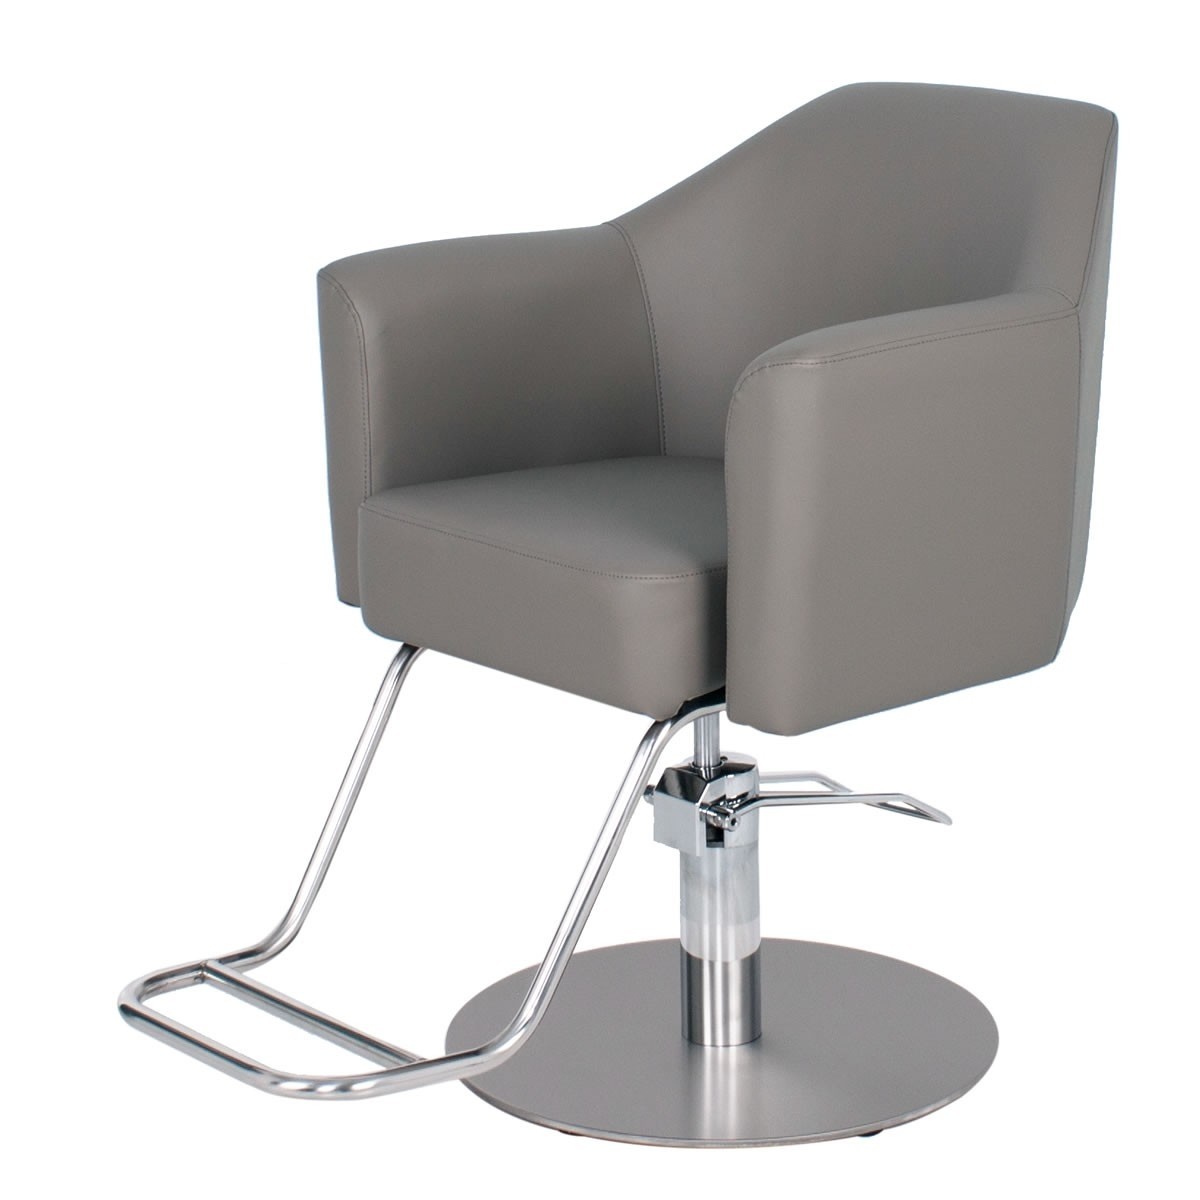 "AUSTIN" Salon Styling Chair in Soft Grey 